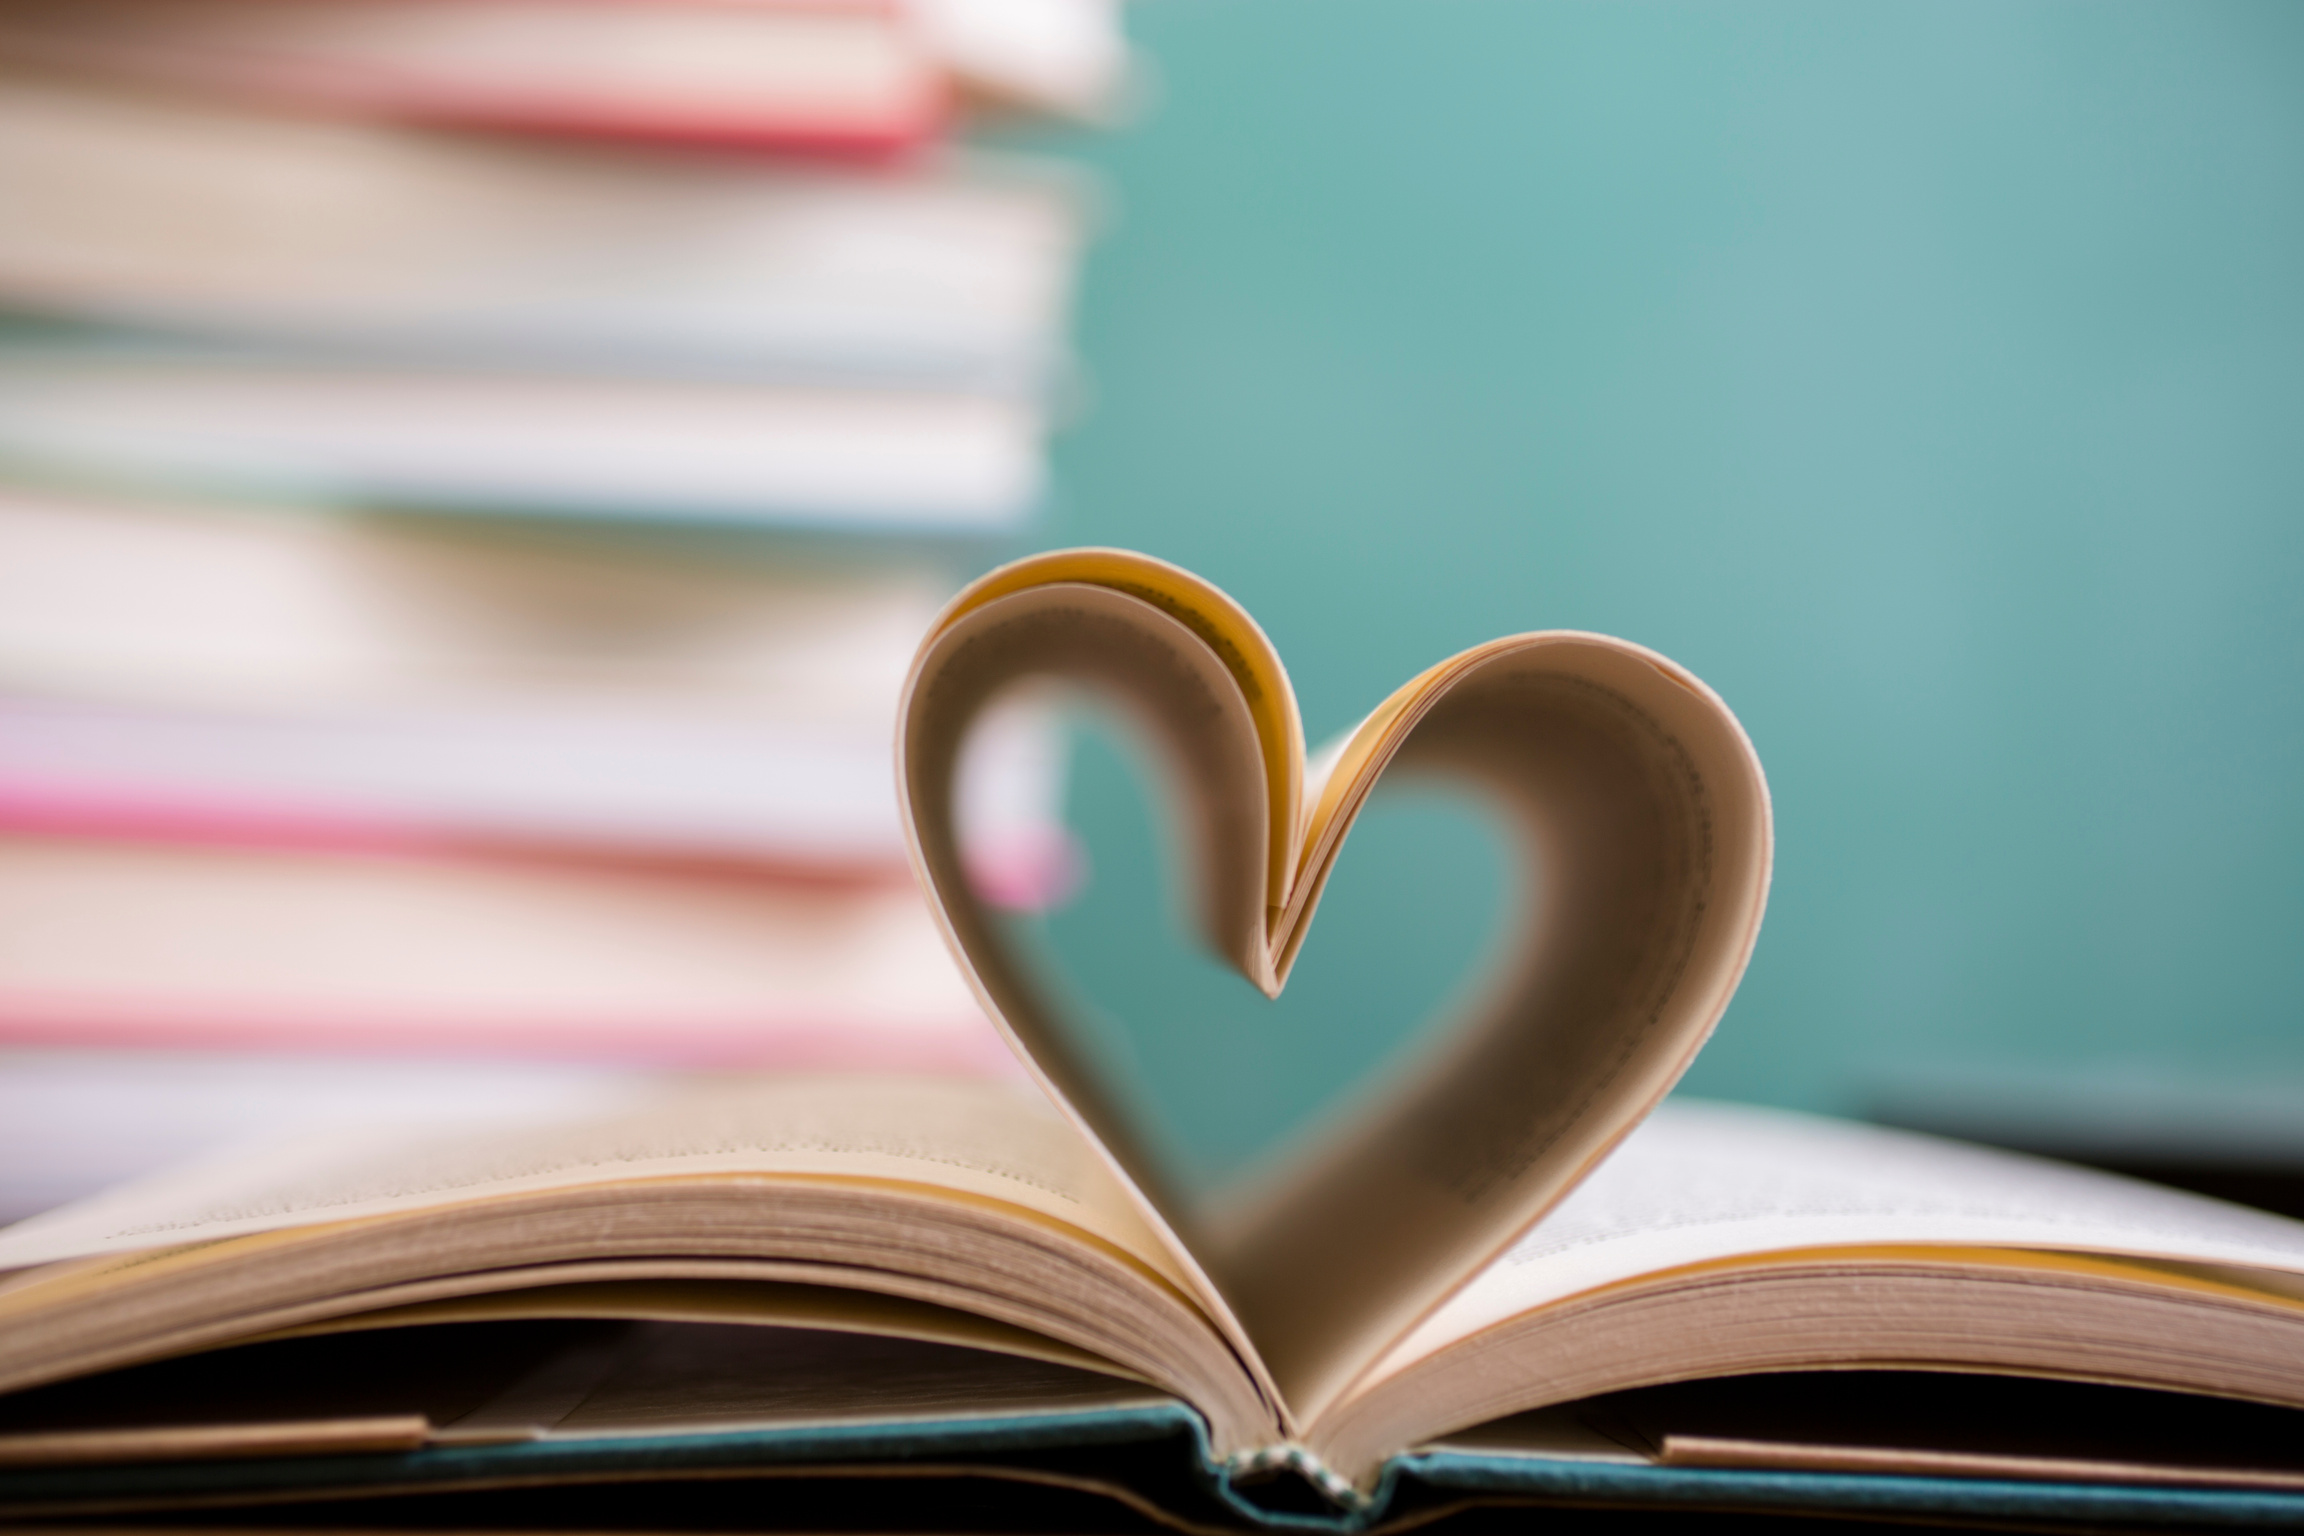 Heart shape in open school book pages.